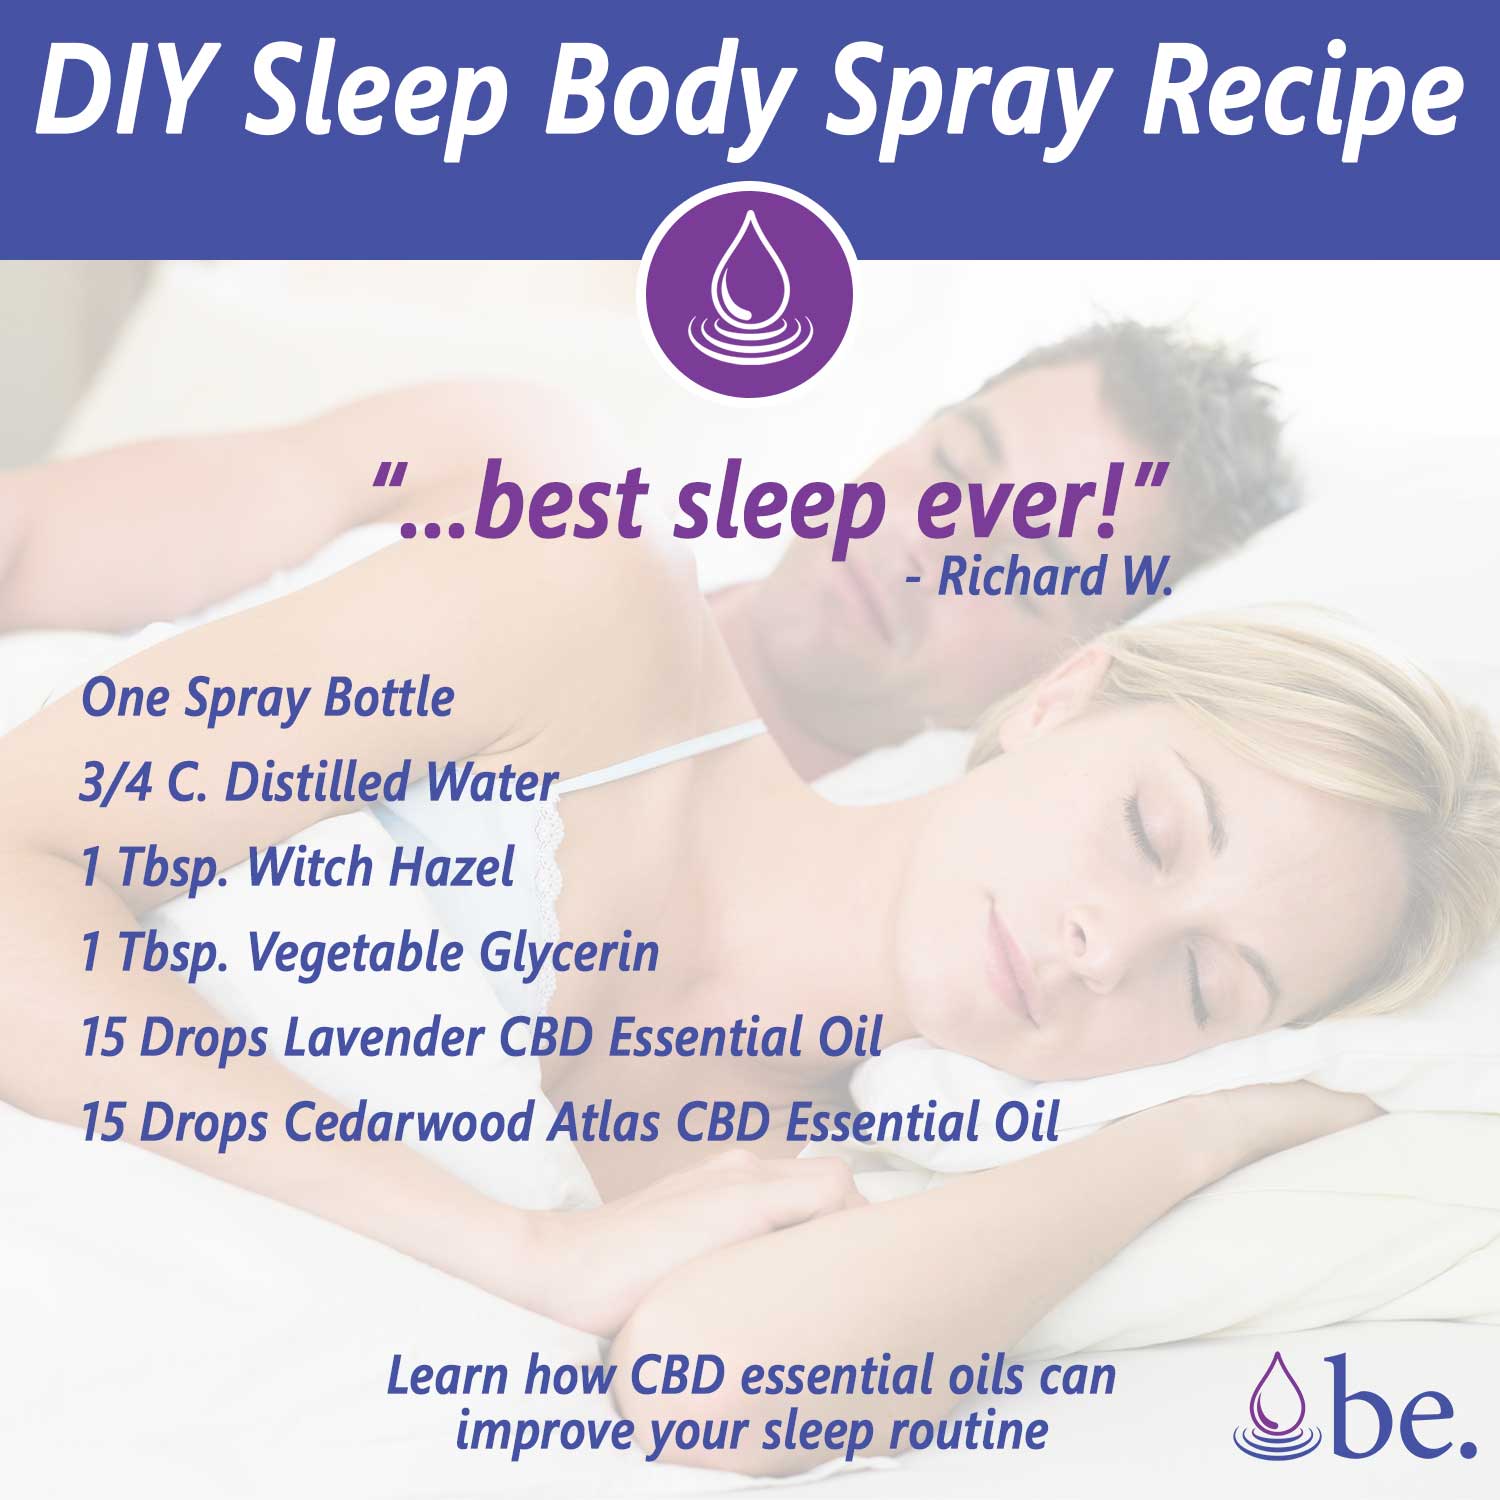 DIY Essential Oil Sleep Body Spray Recipe with CBD